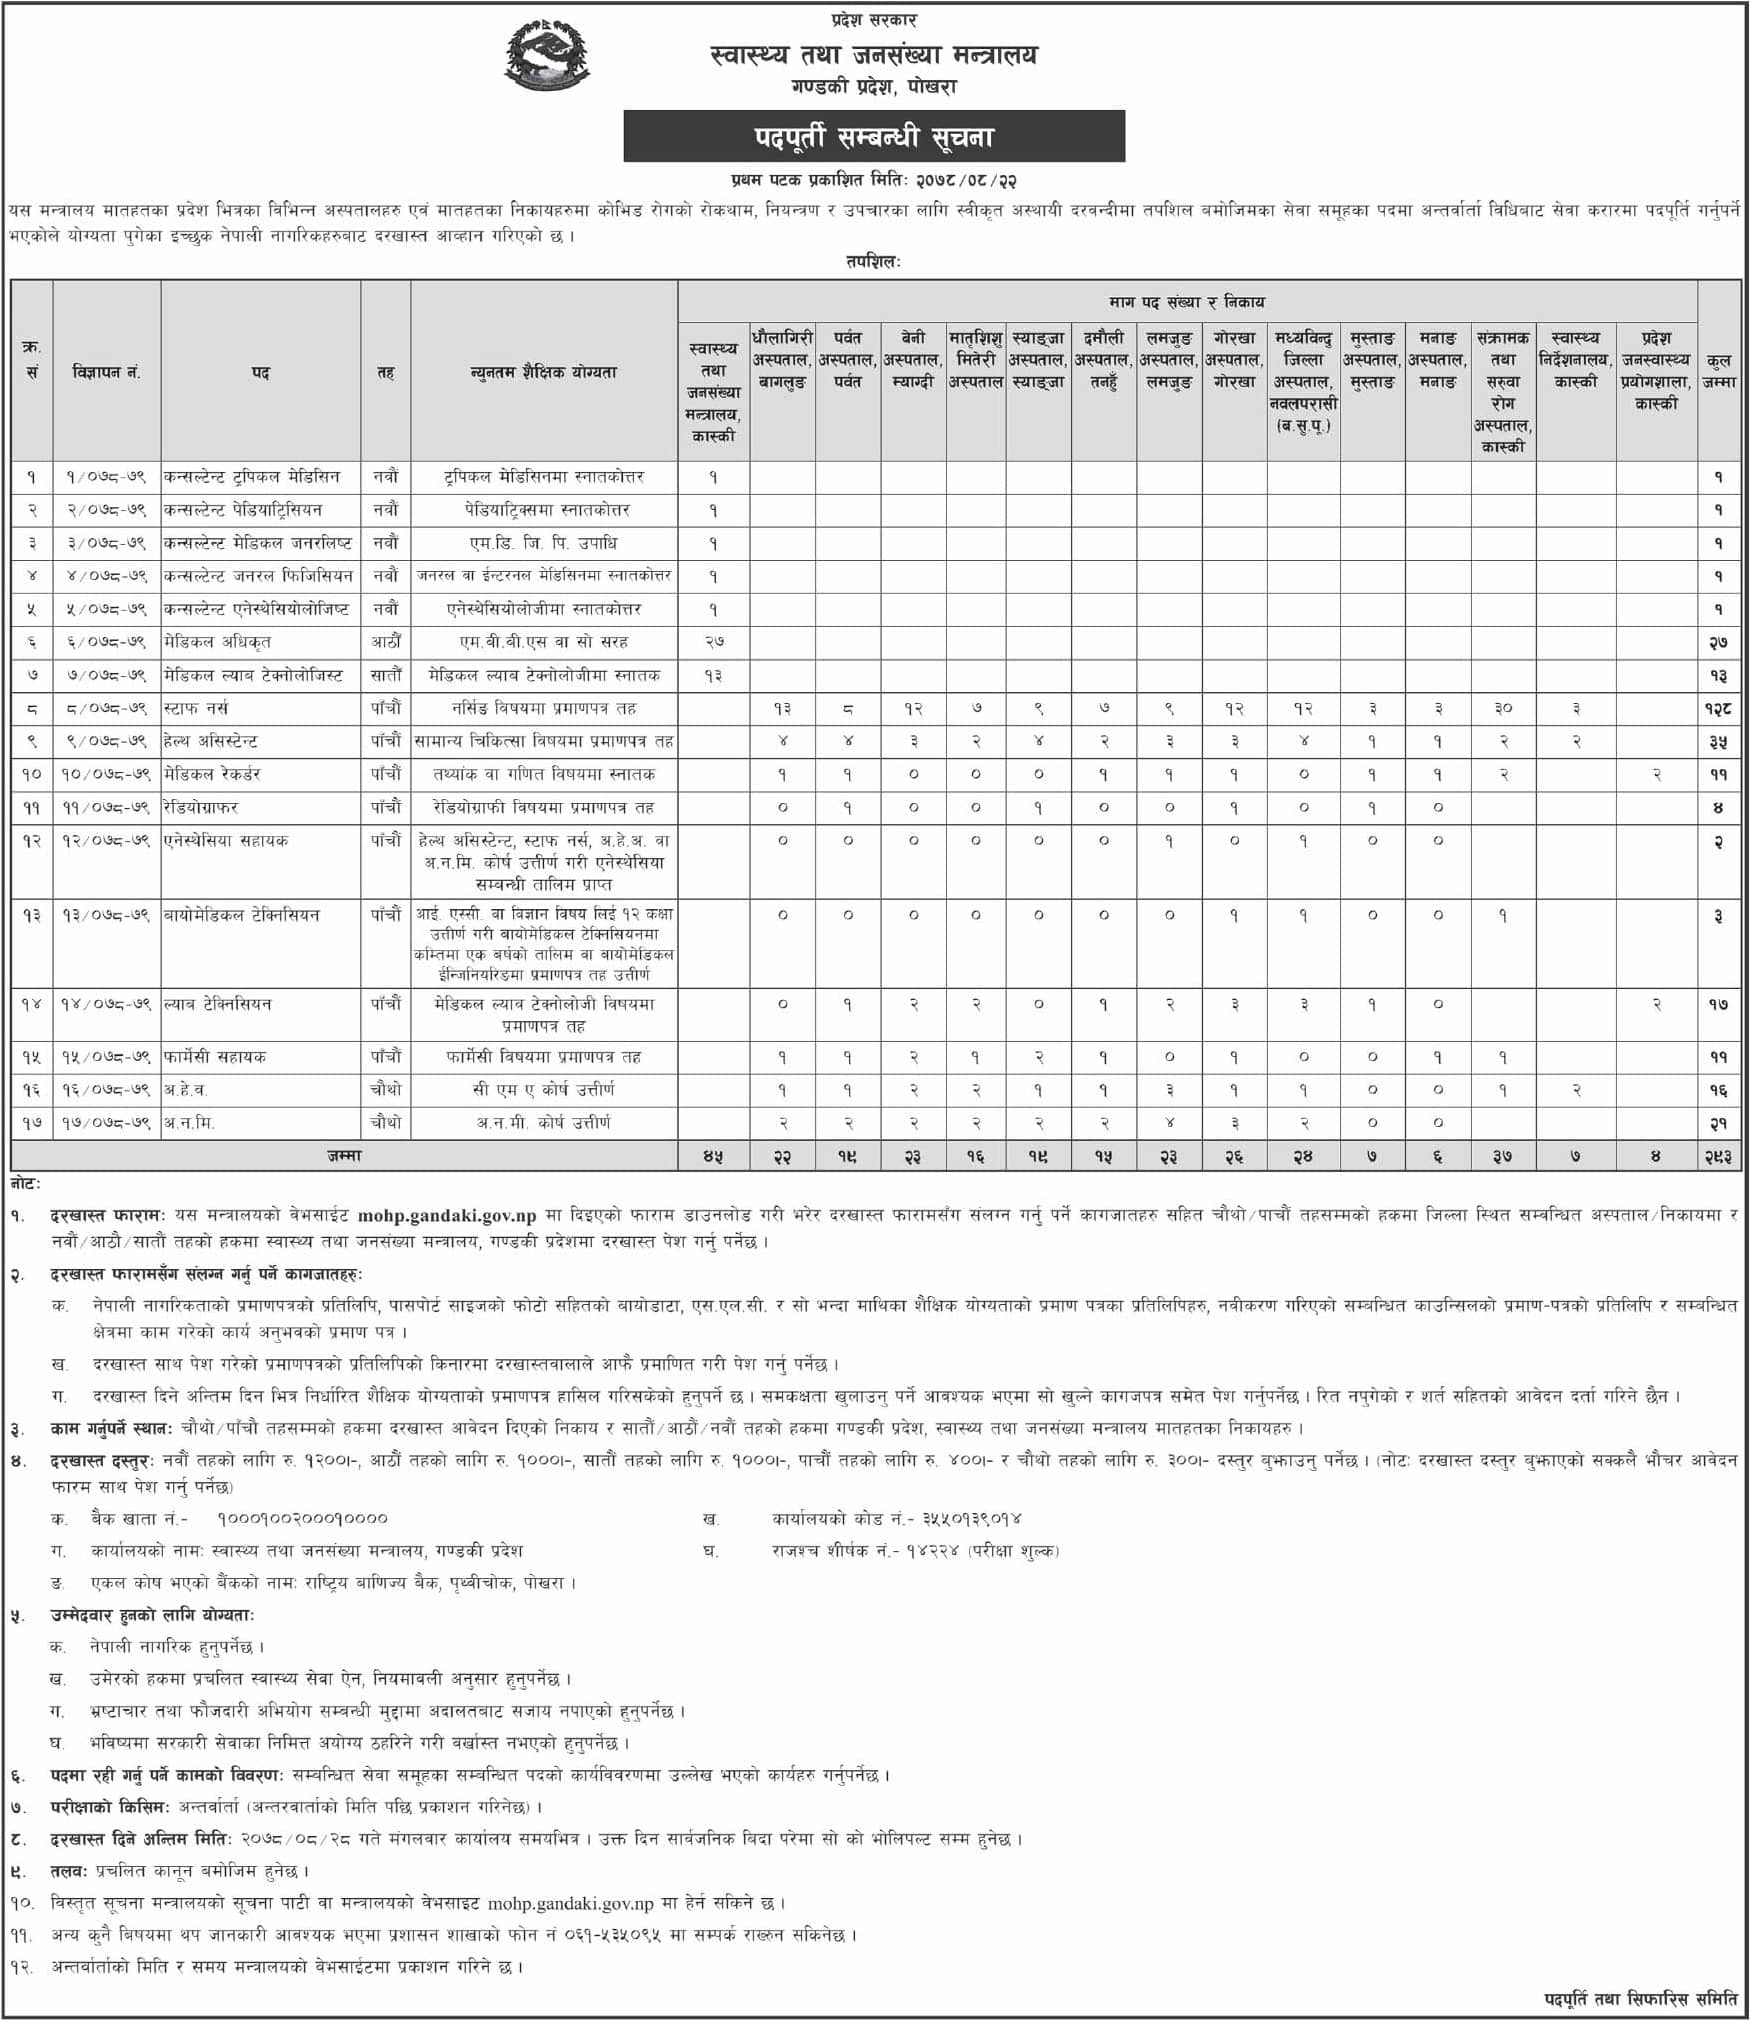 Gandaki Pradesh Vacancy for Various 293 Positions